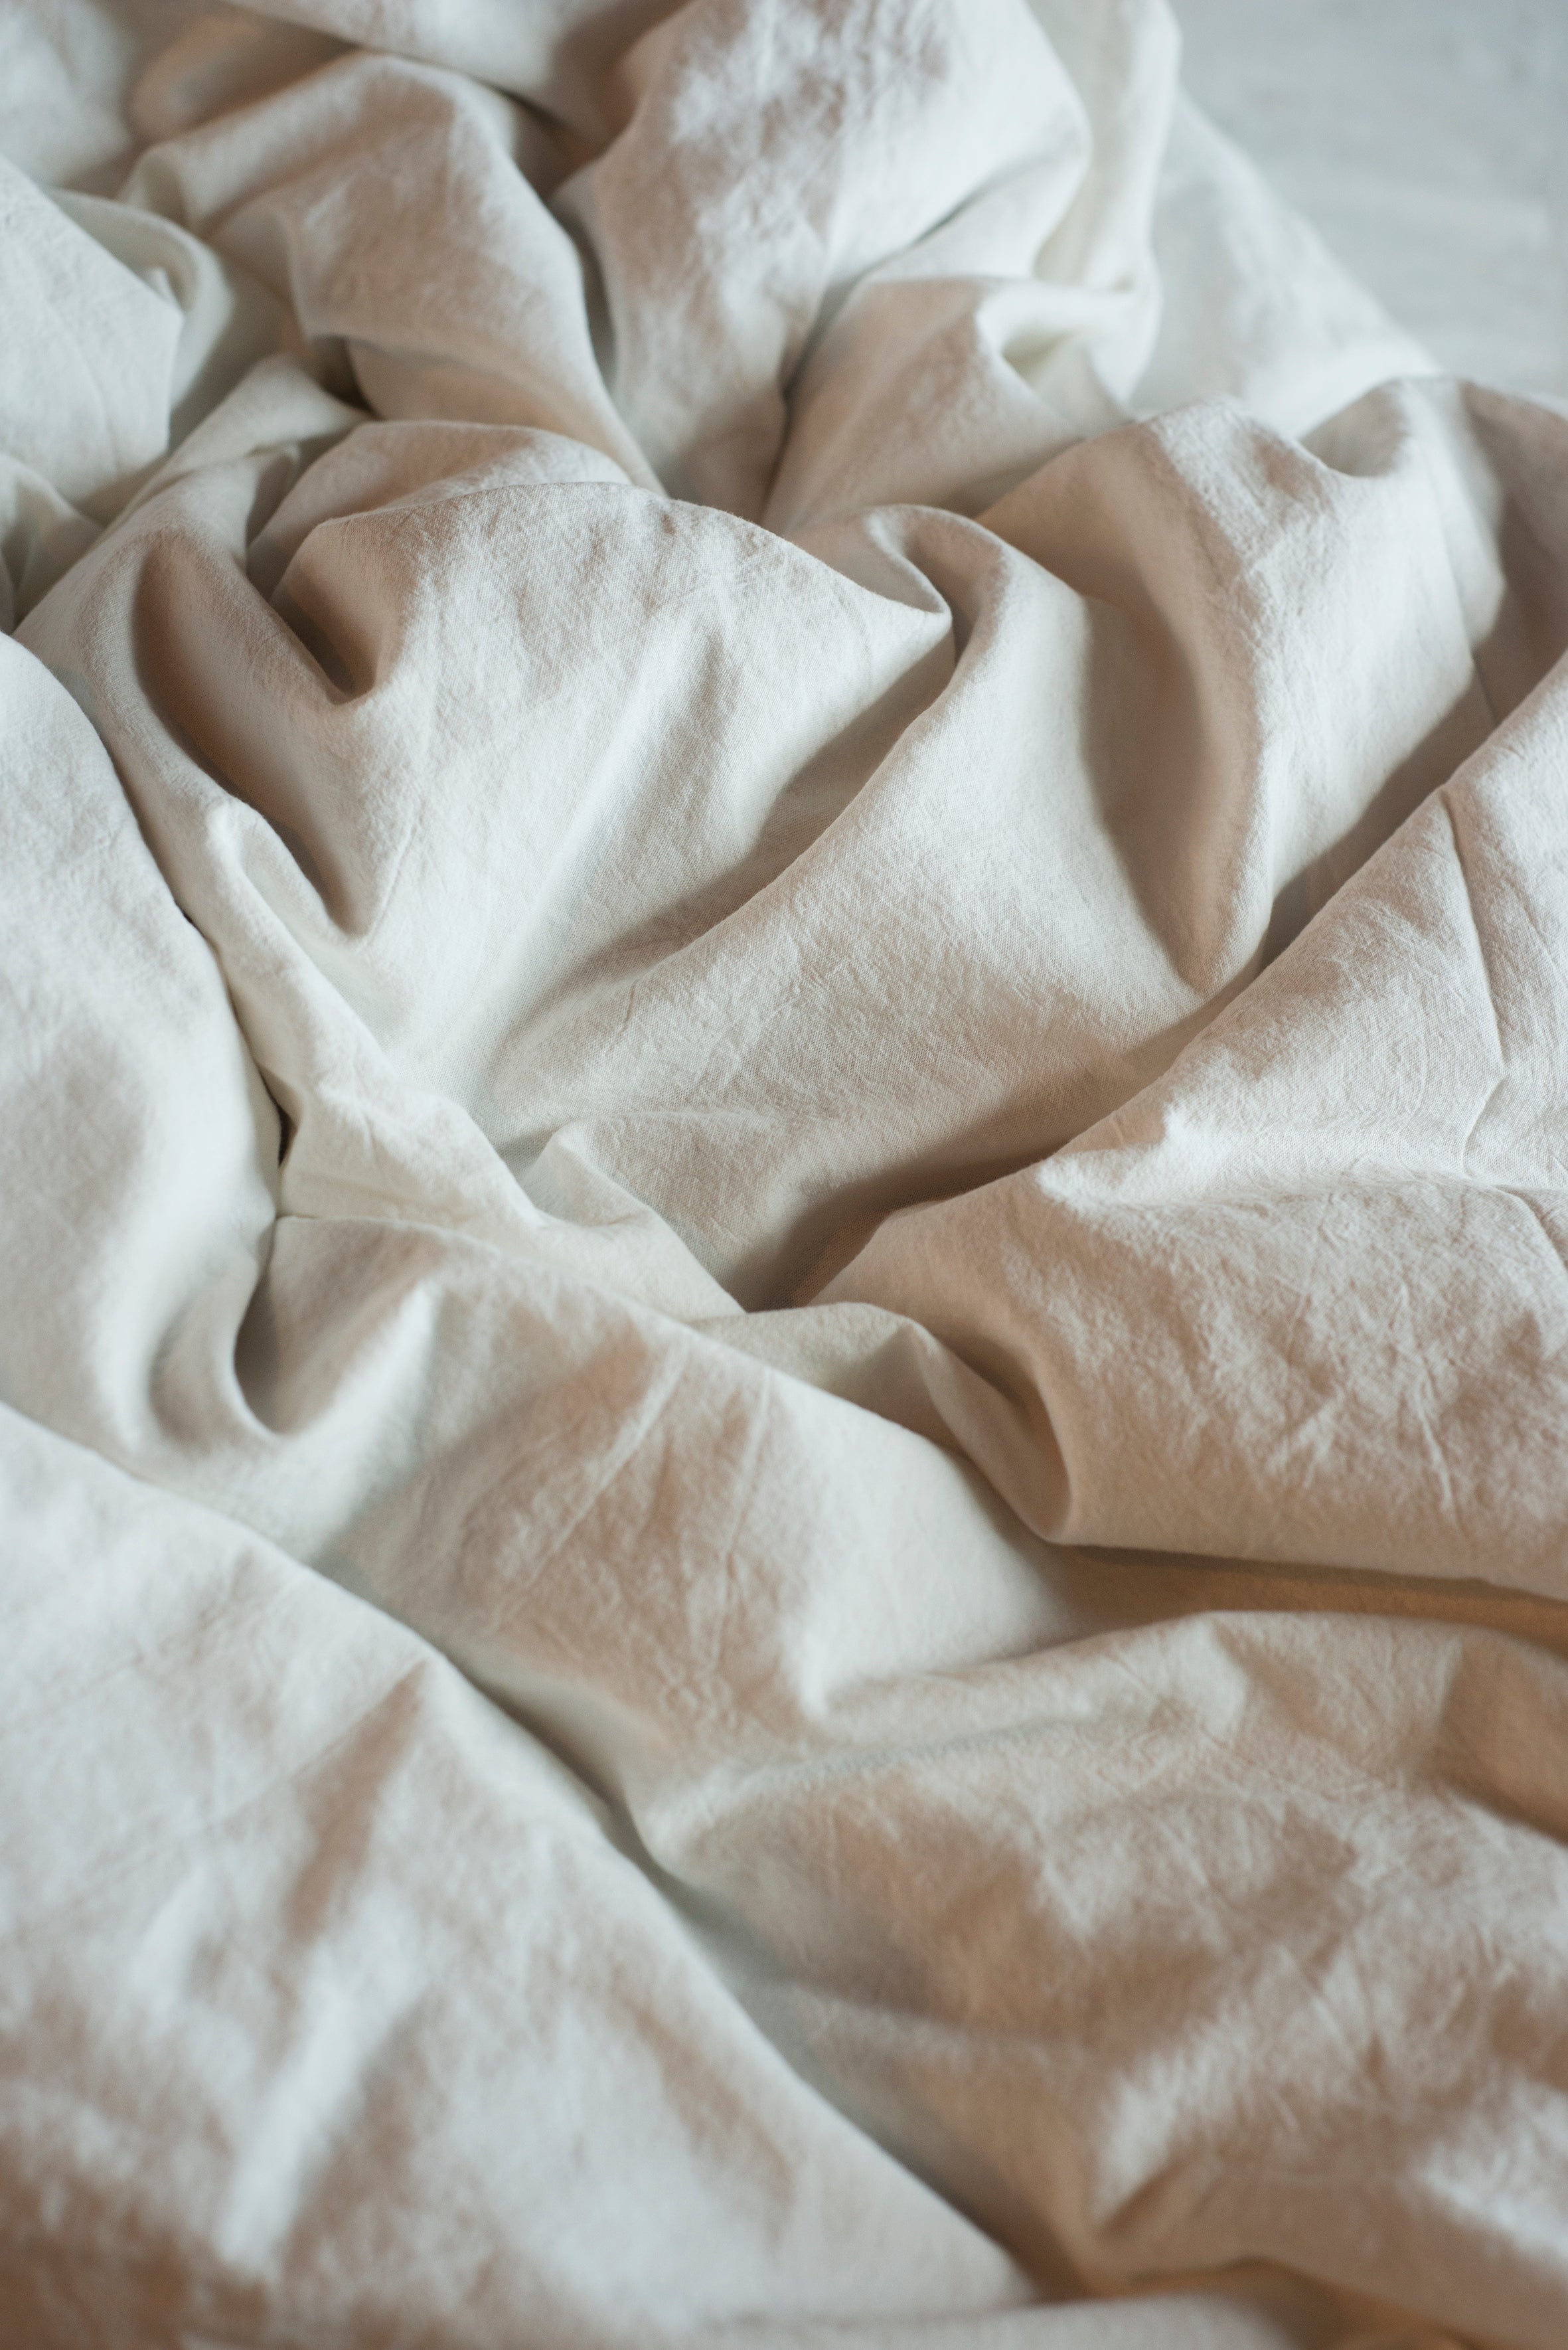 Stonewashed Cotton Bedding Set, White